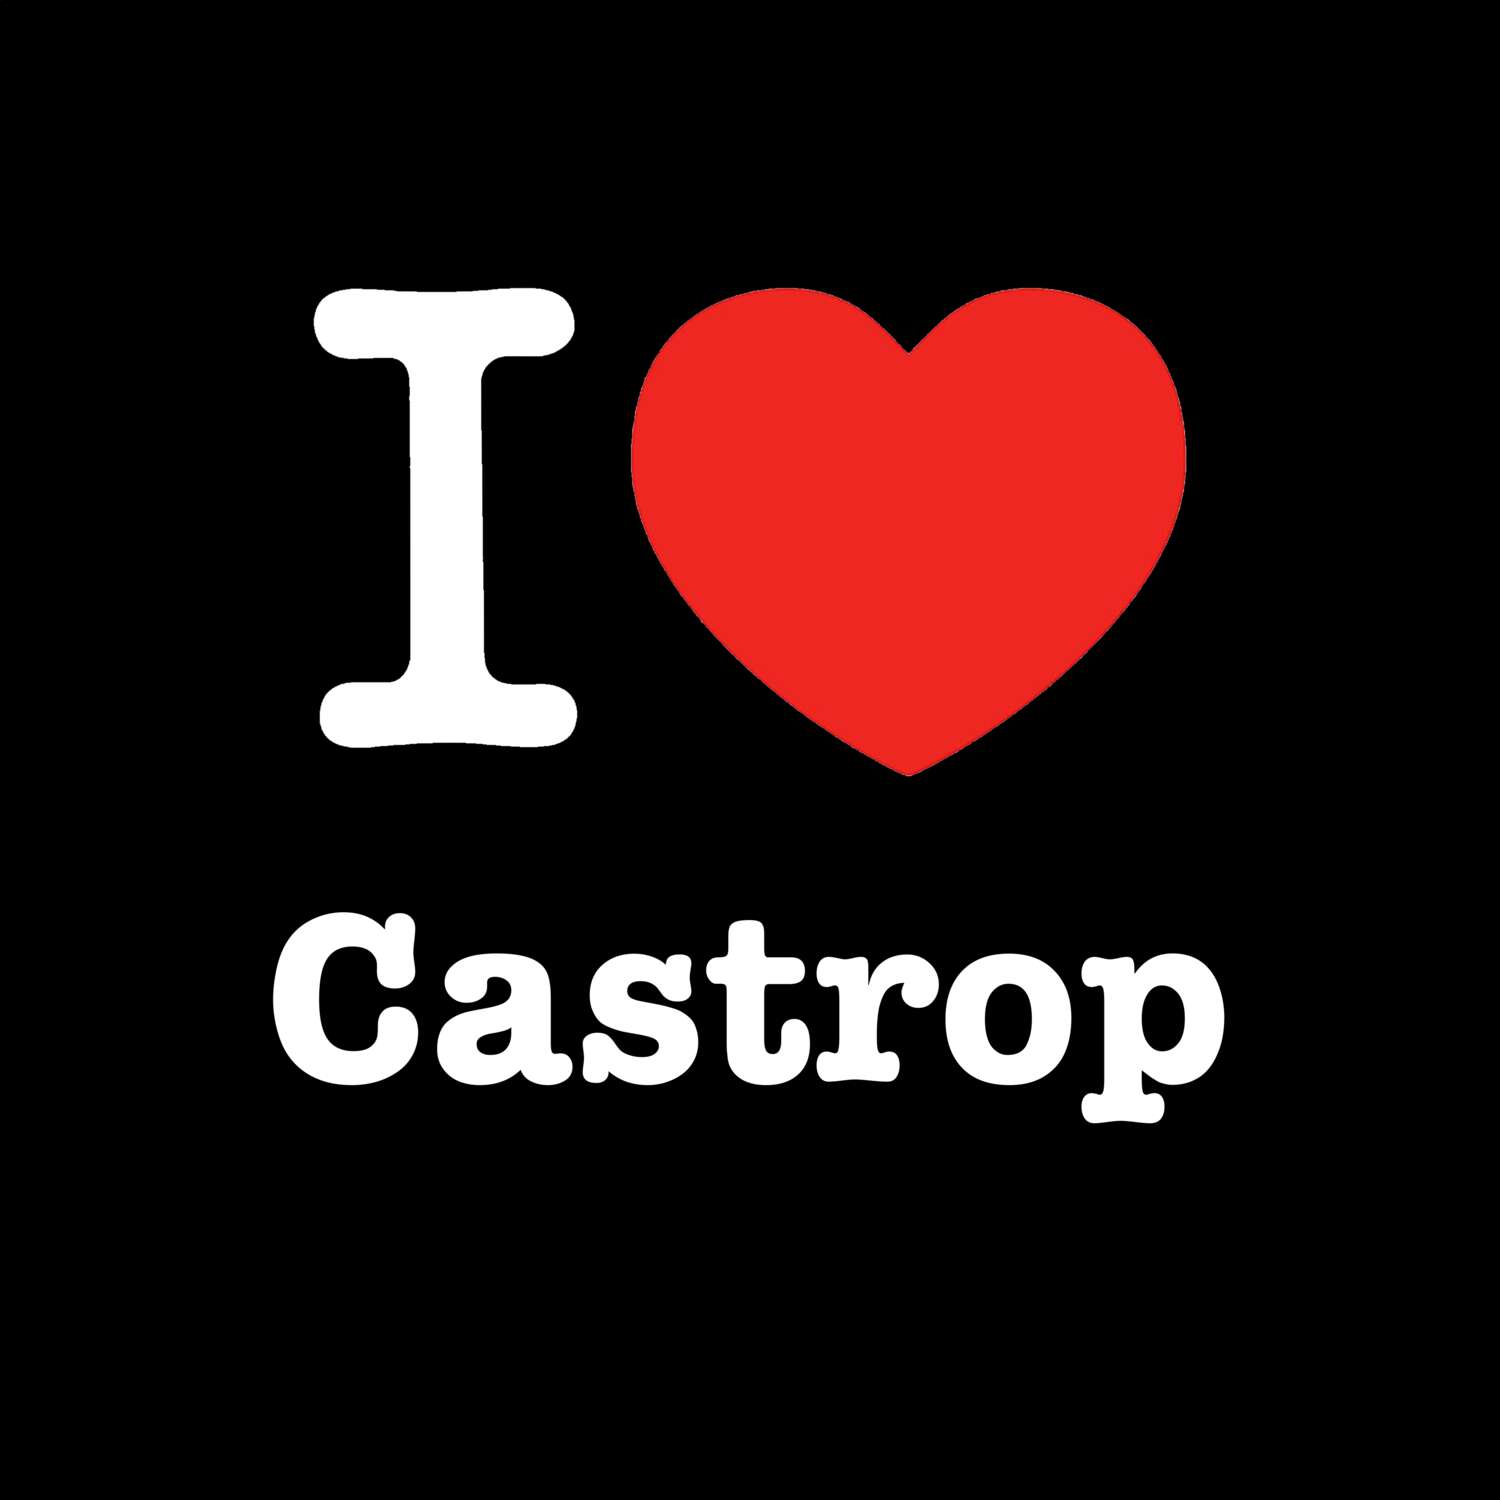 Castrop T-Shirt »I love«